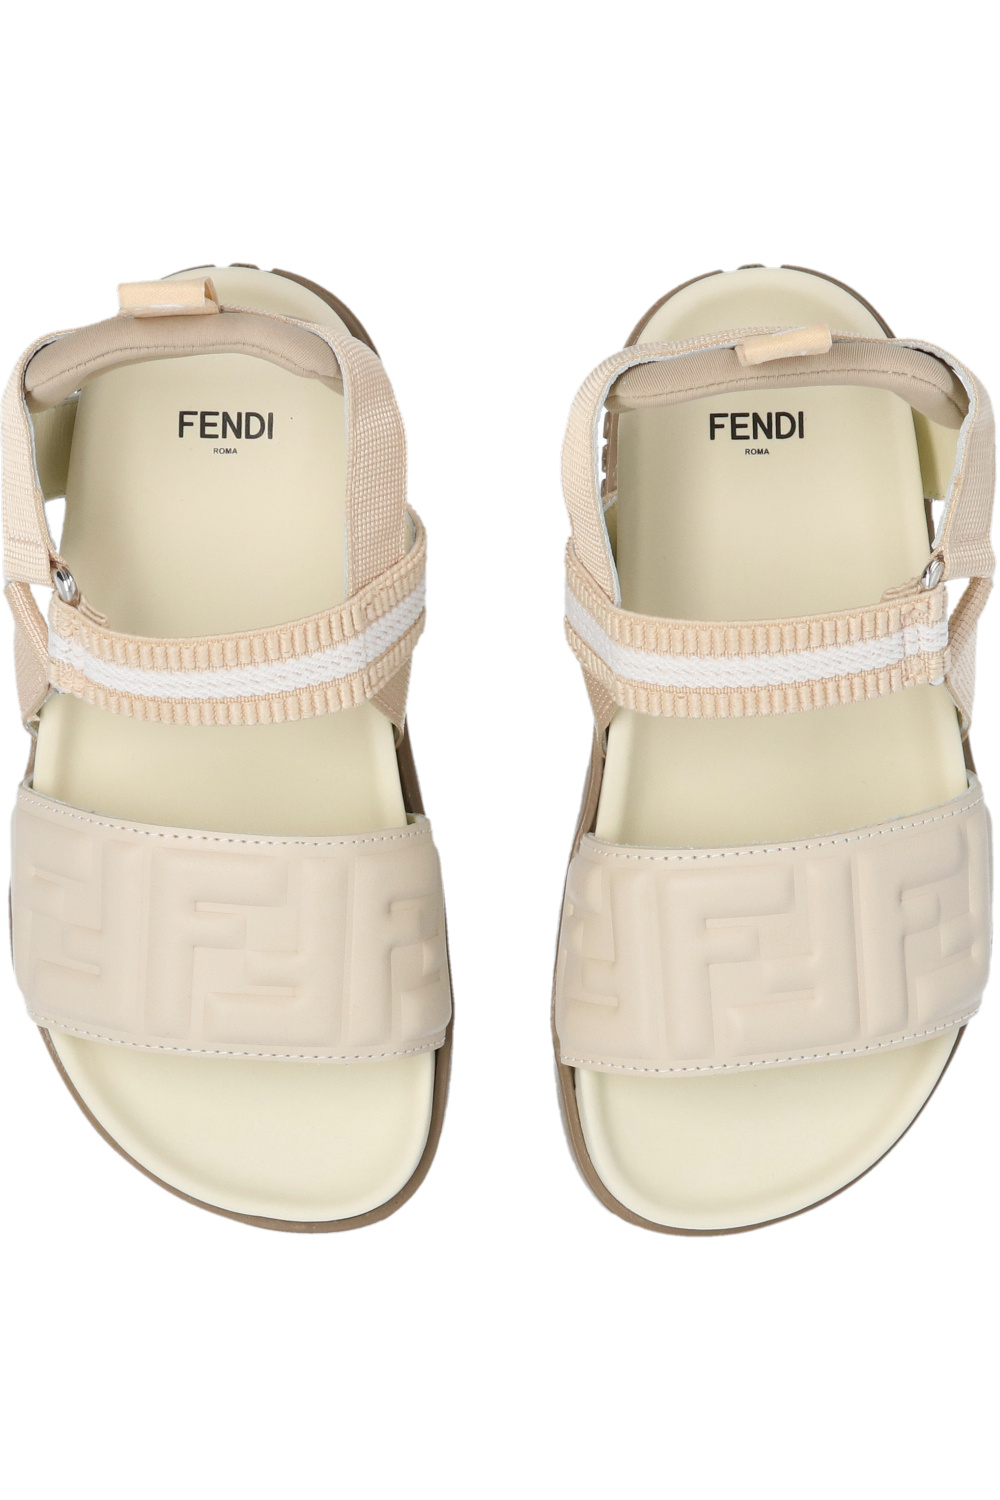 Fendi Kids high top sneakers fendi shoes